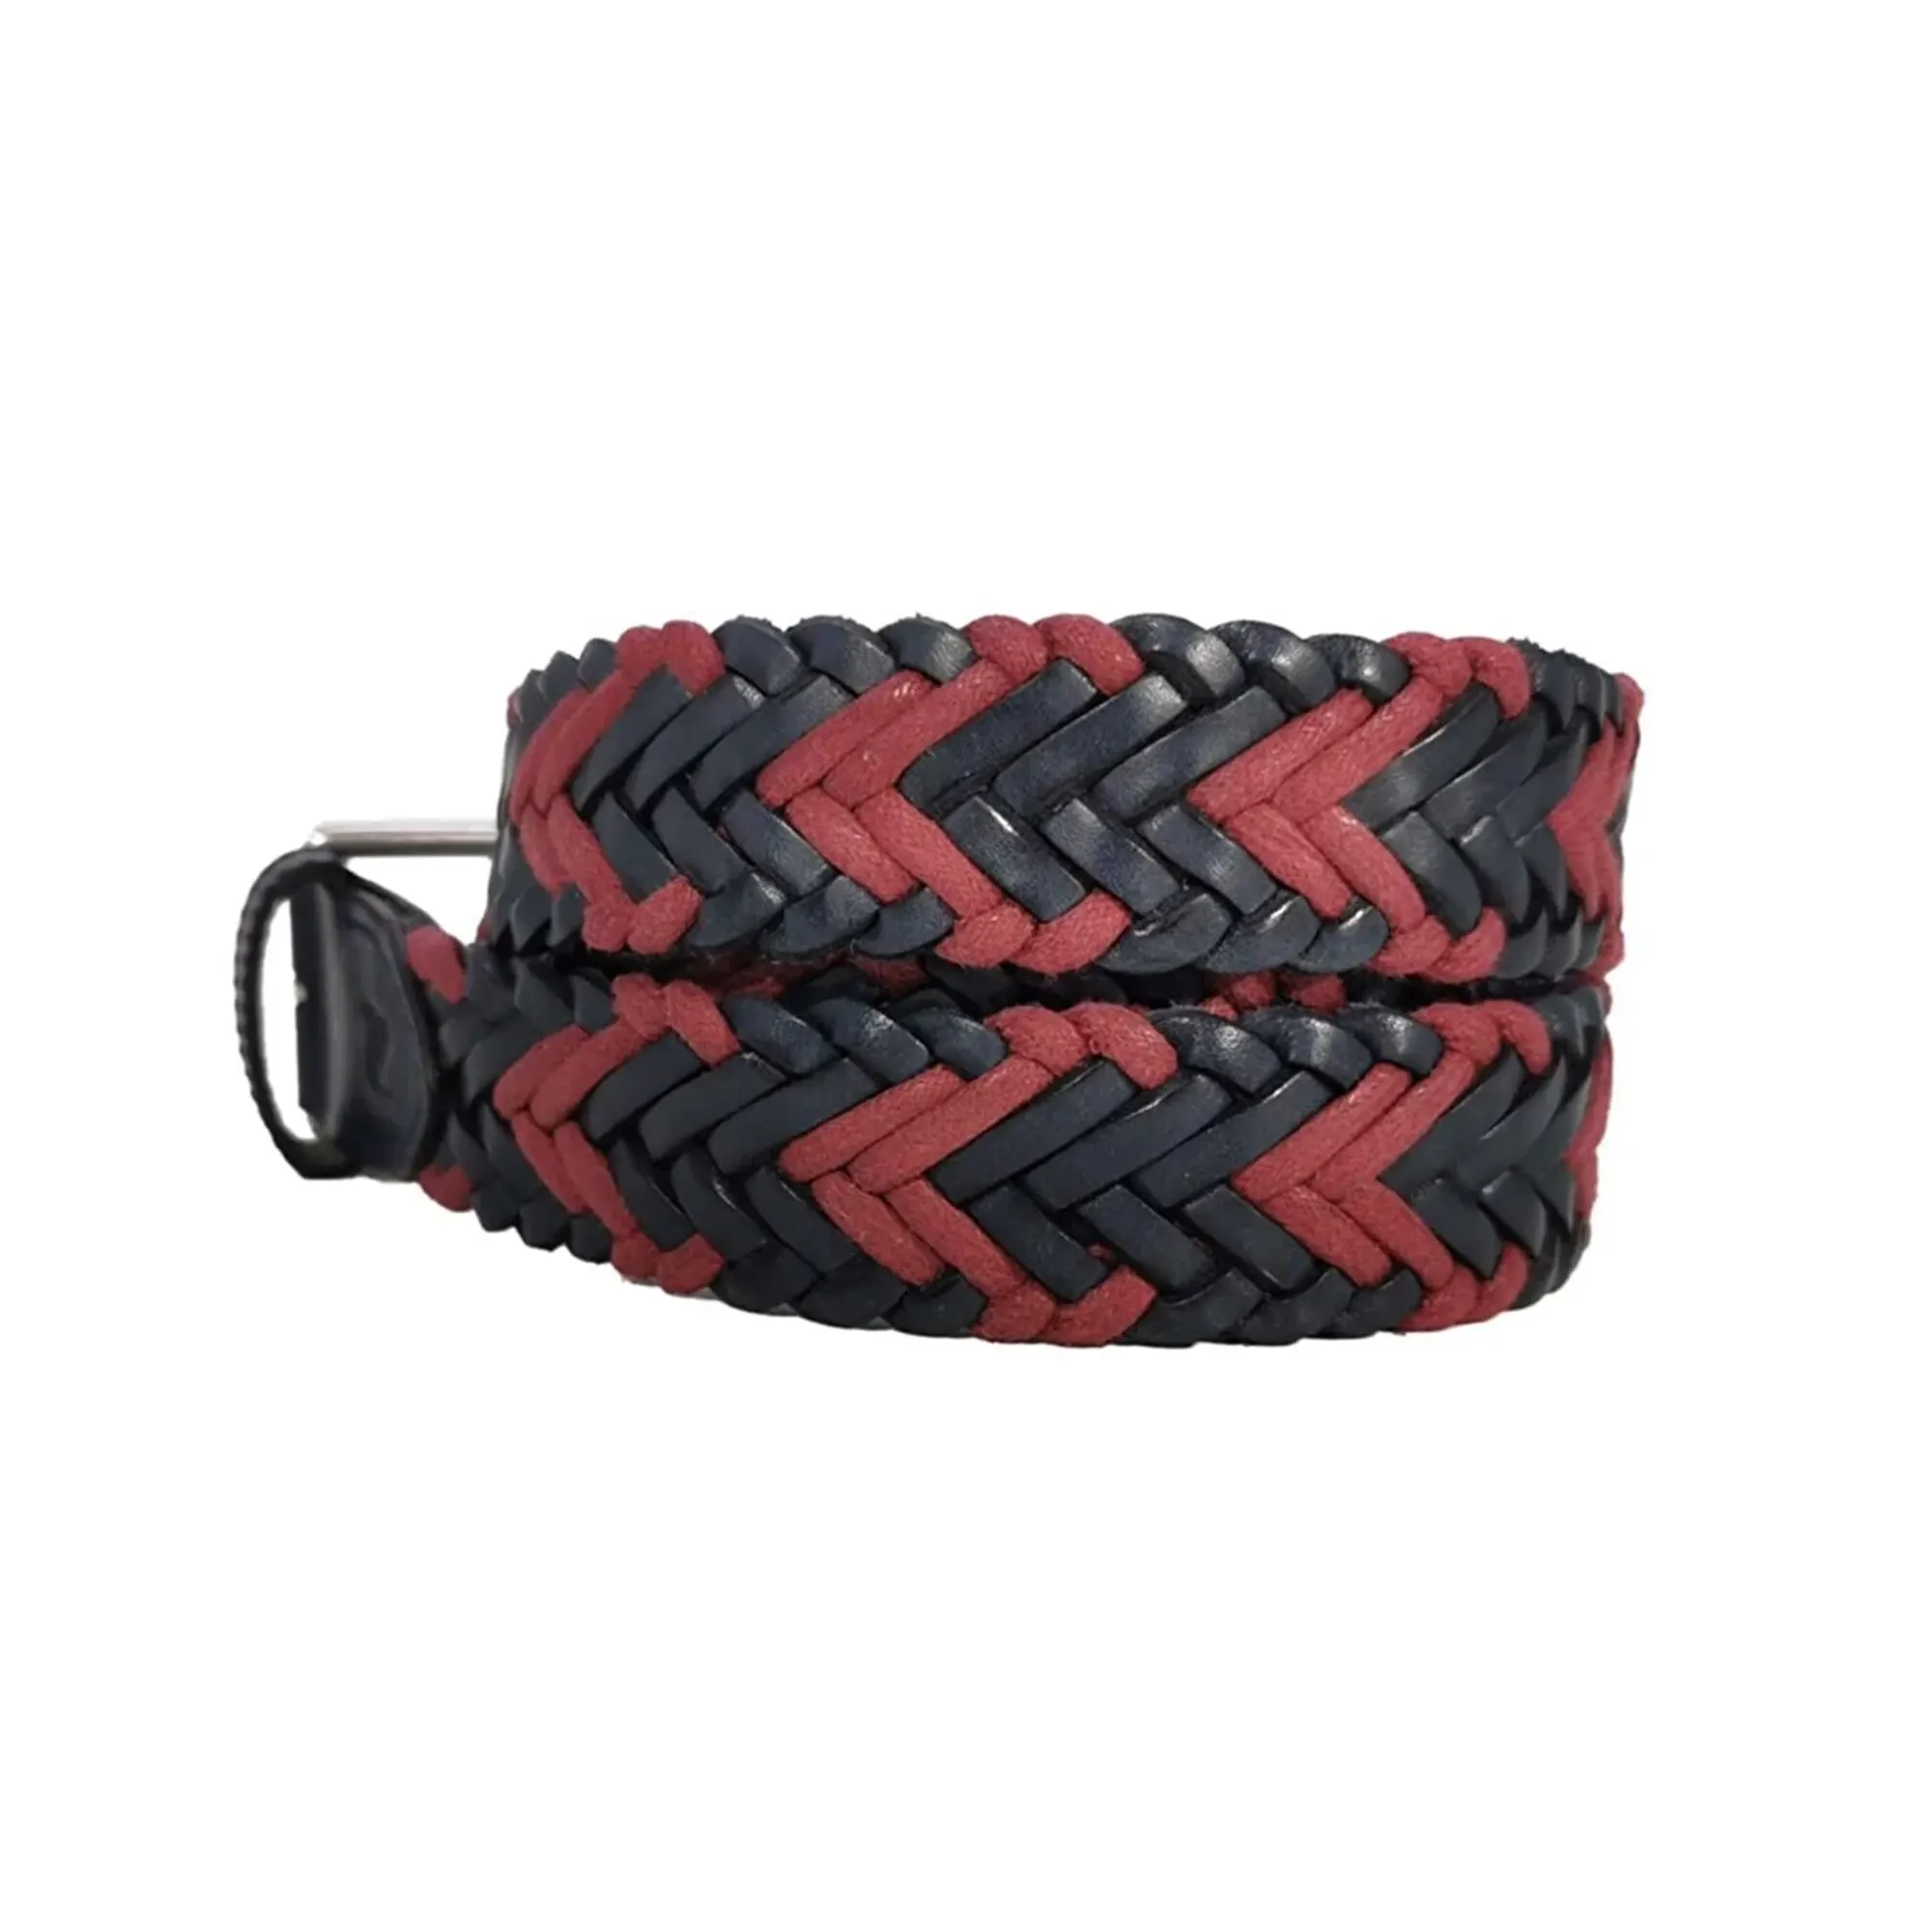 Buy Mens Braided Belt Black Red Leather 